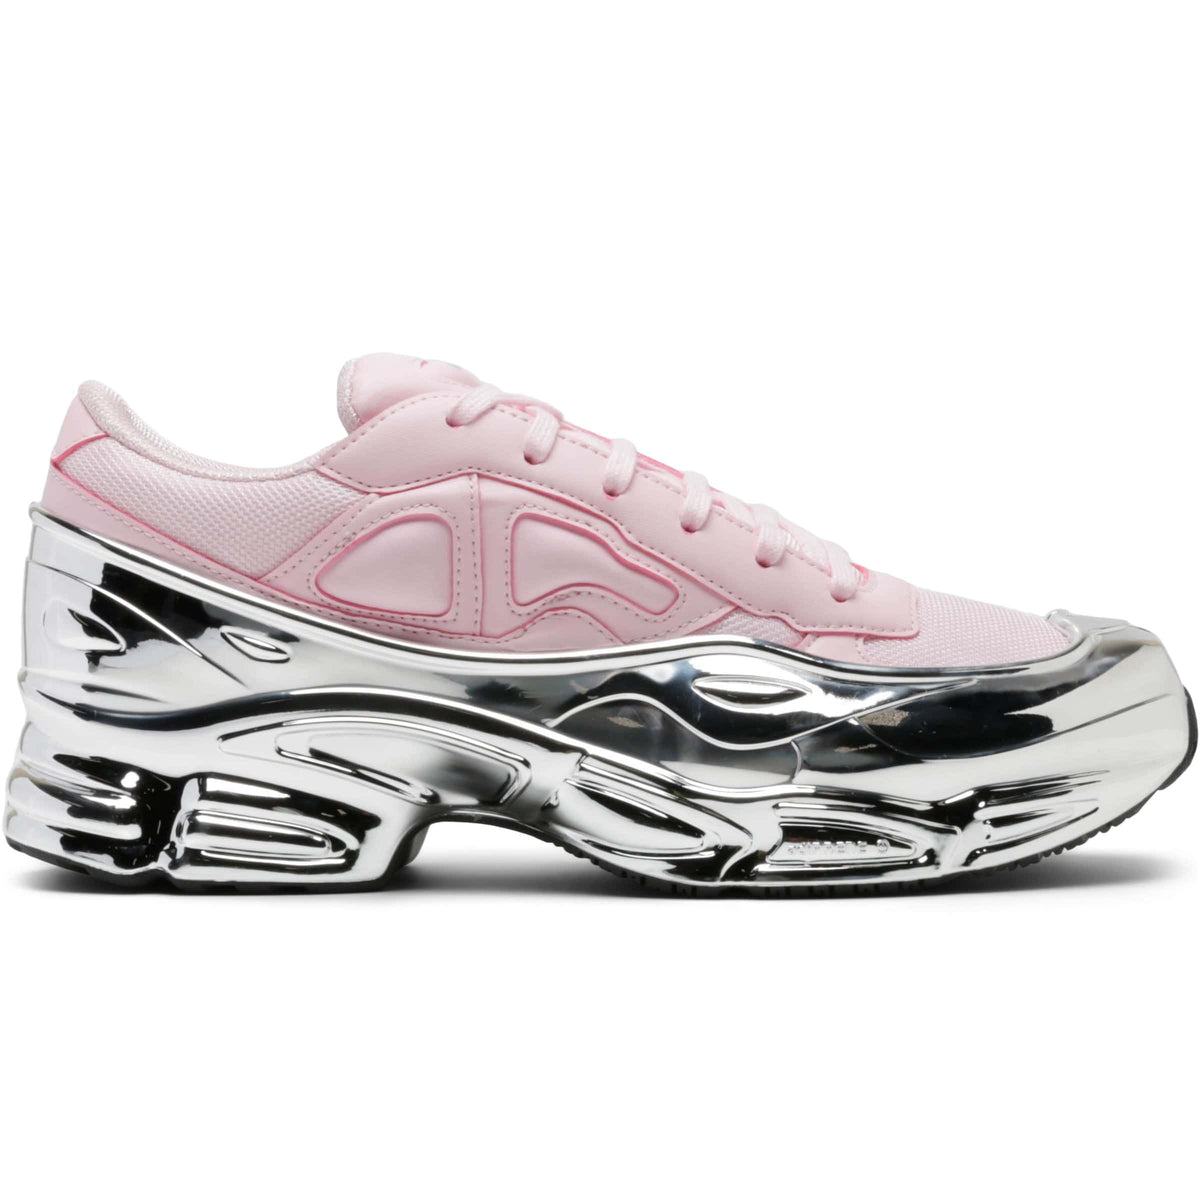 adidas x raf simons ozweego pink & metallic silver